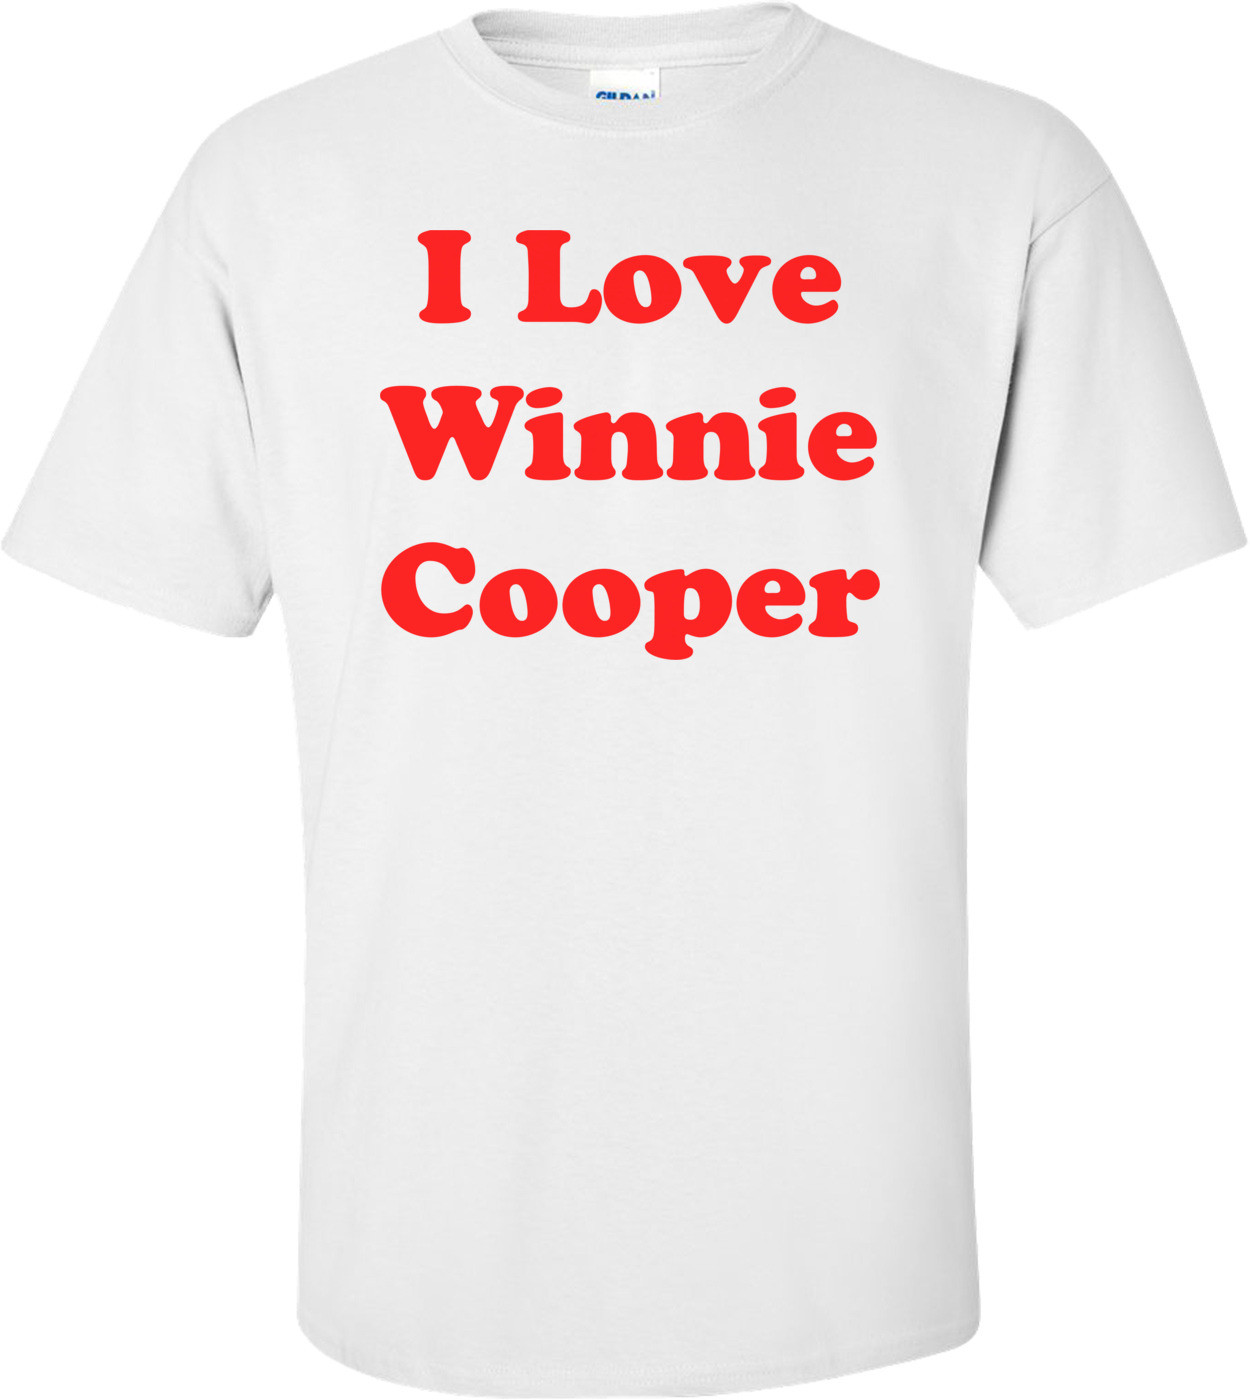 I Love Winnie Cooper